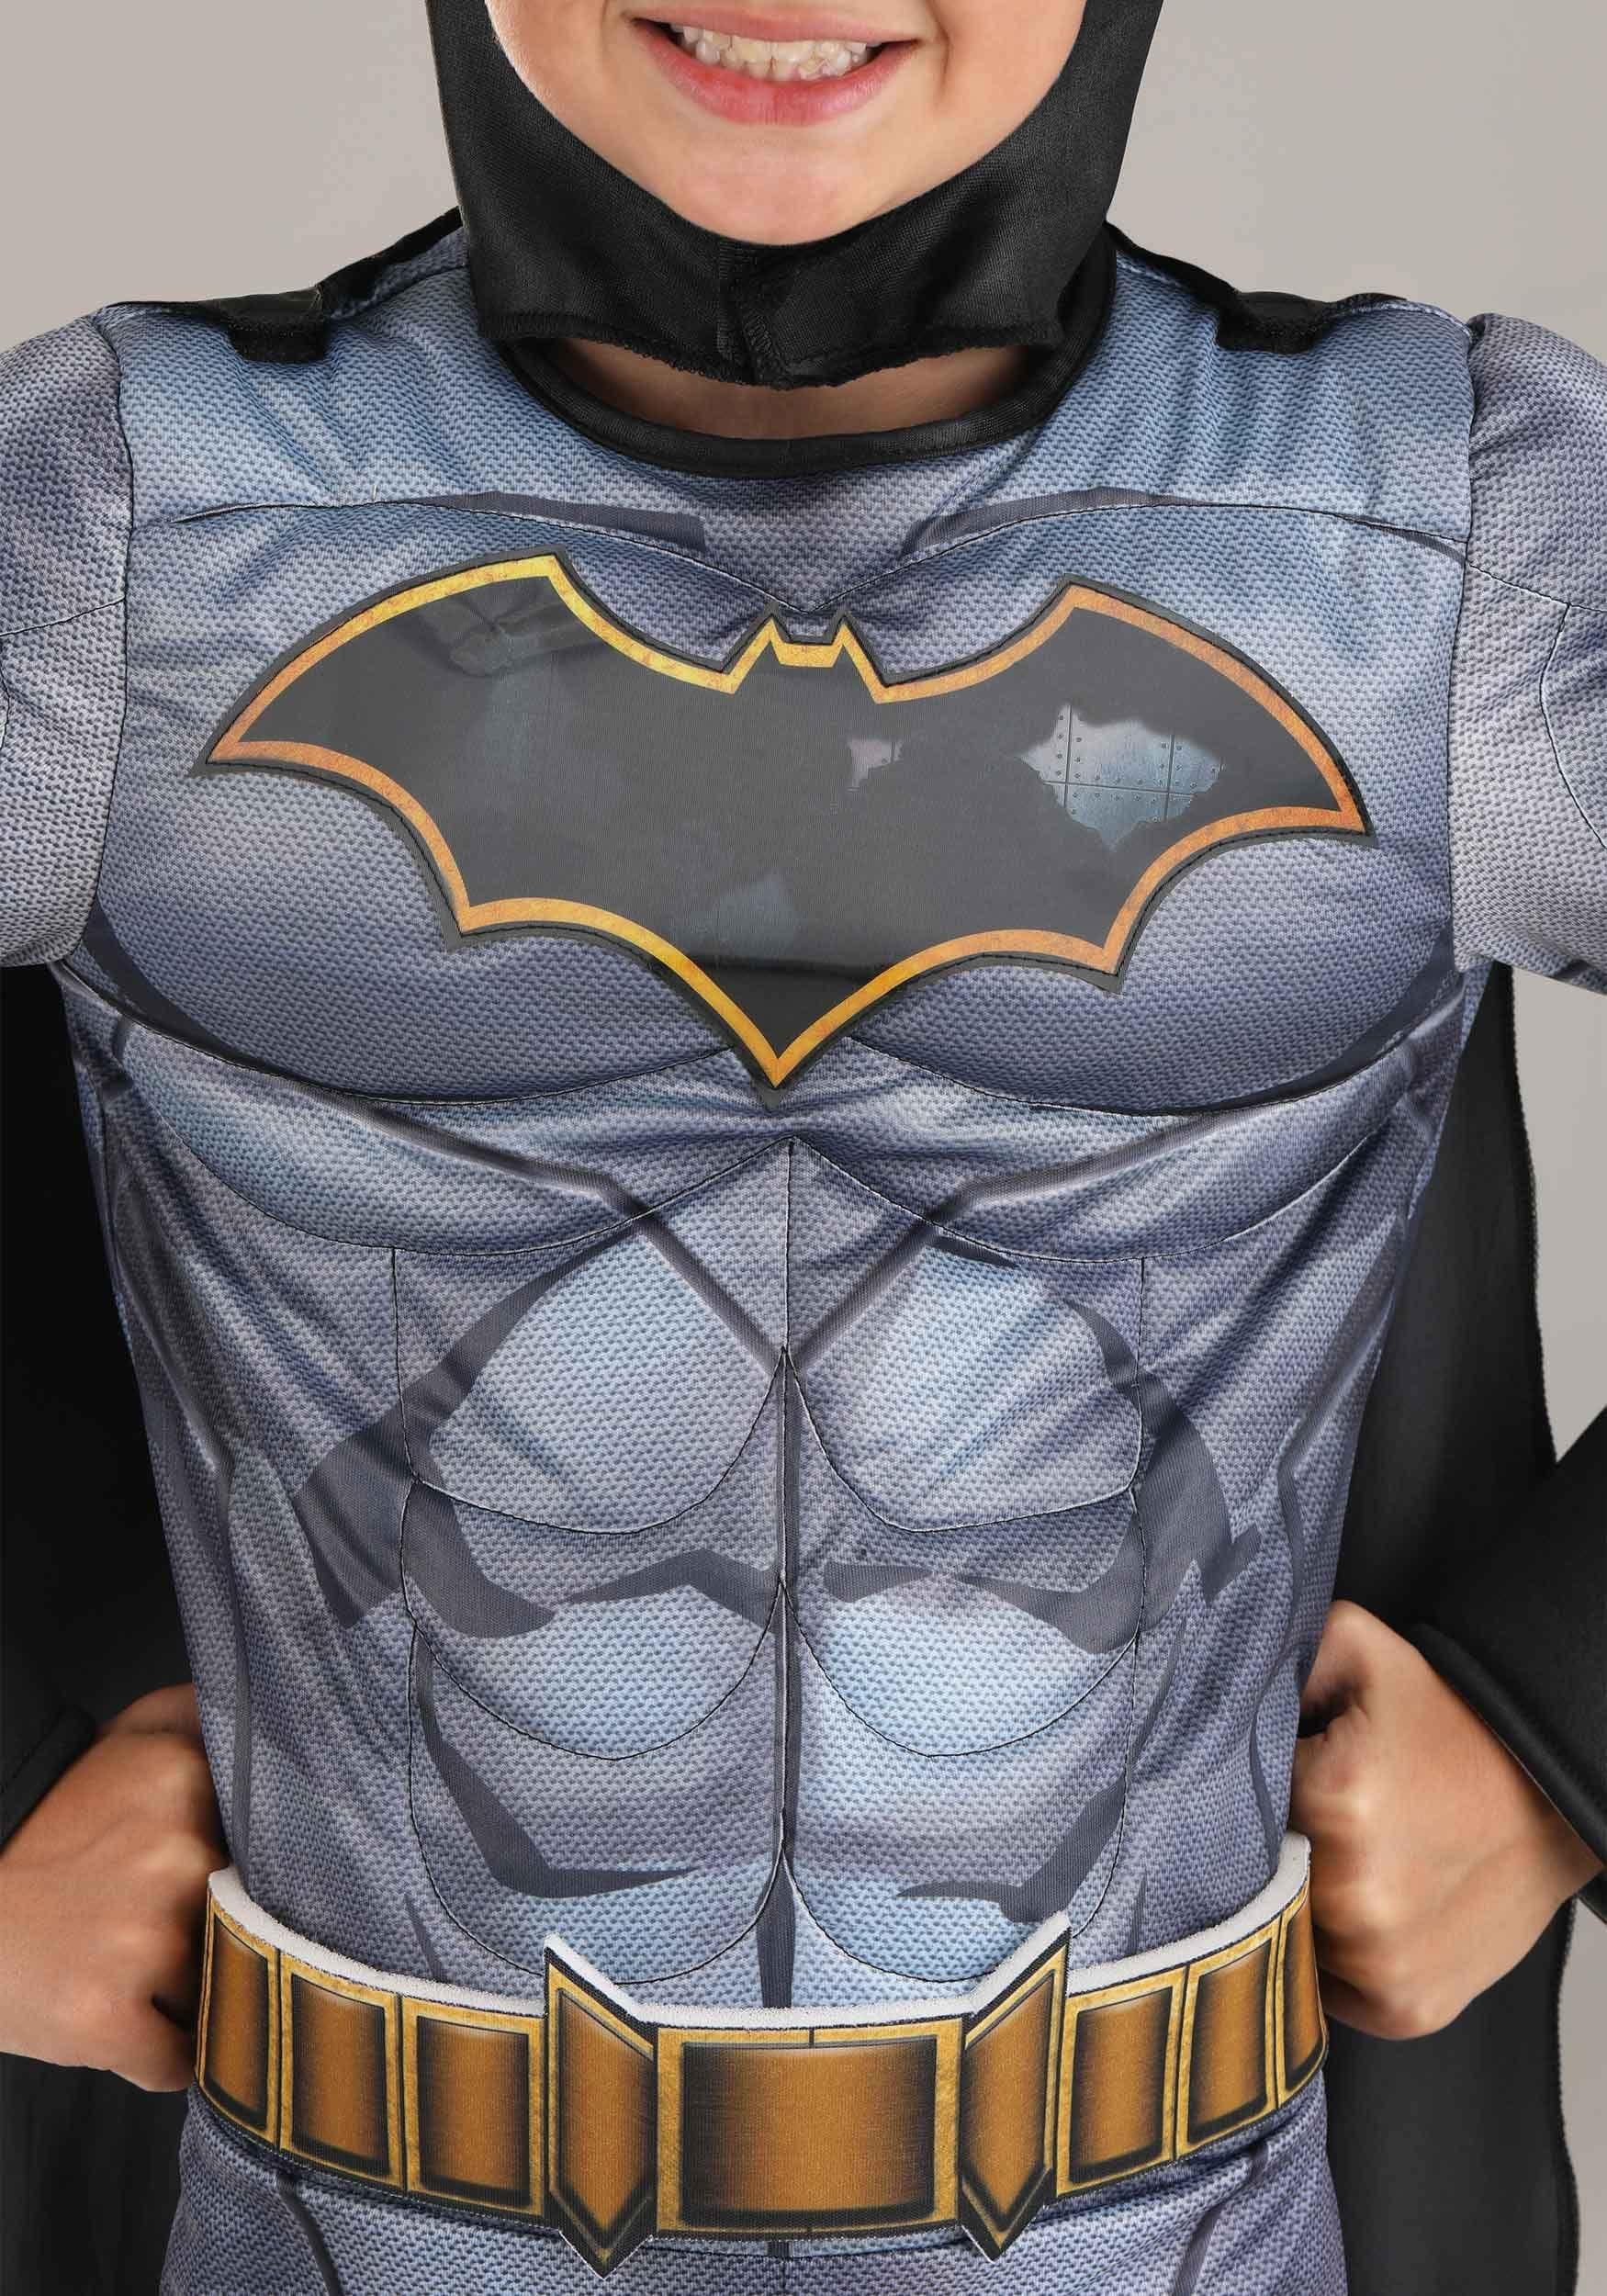 Deluxe DC Comics Batman Costume for Kids, Black Superhero Suit, Cape & Mask for Superhero Parties & Halloween